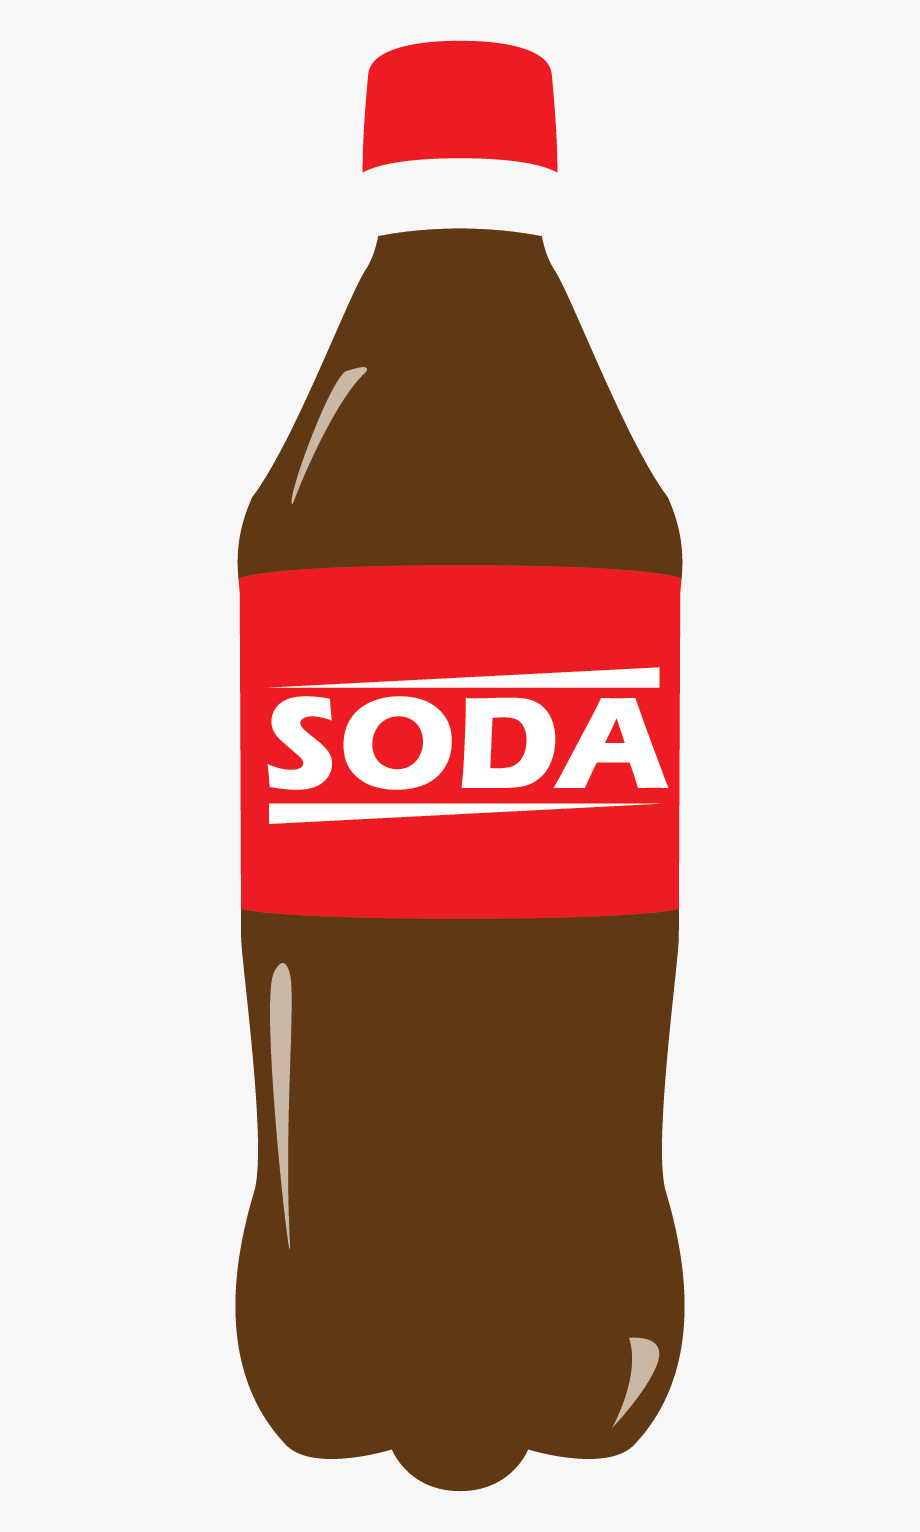 soda can clipart bottle